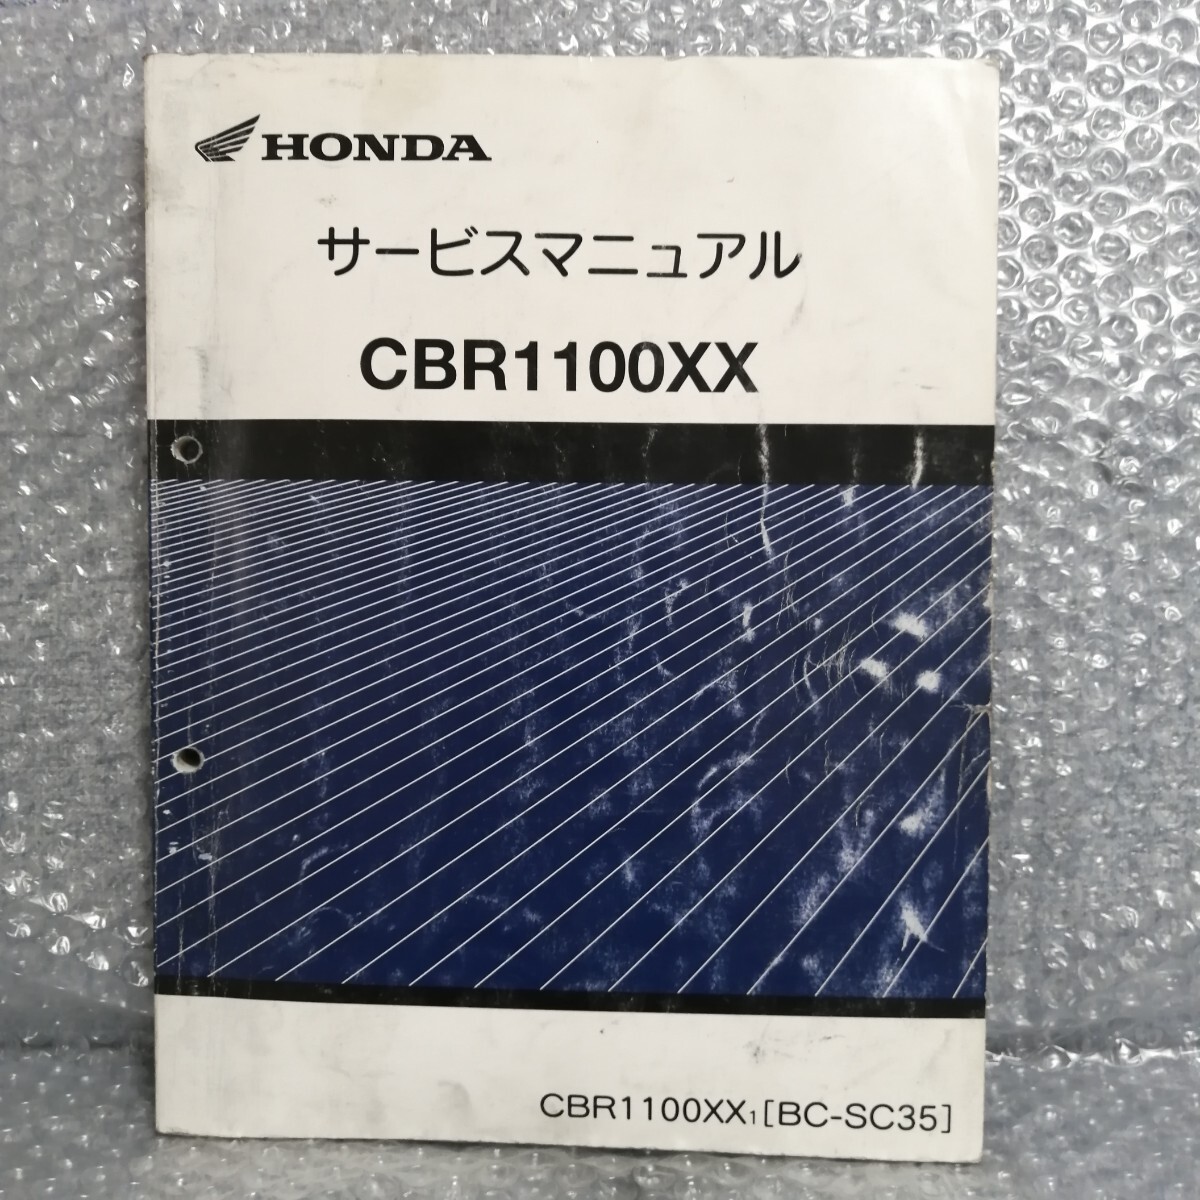  Honda CBR1100XX Blackbird service manual SC35 service book repair book restore maintenance 6337